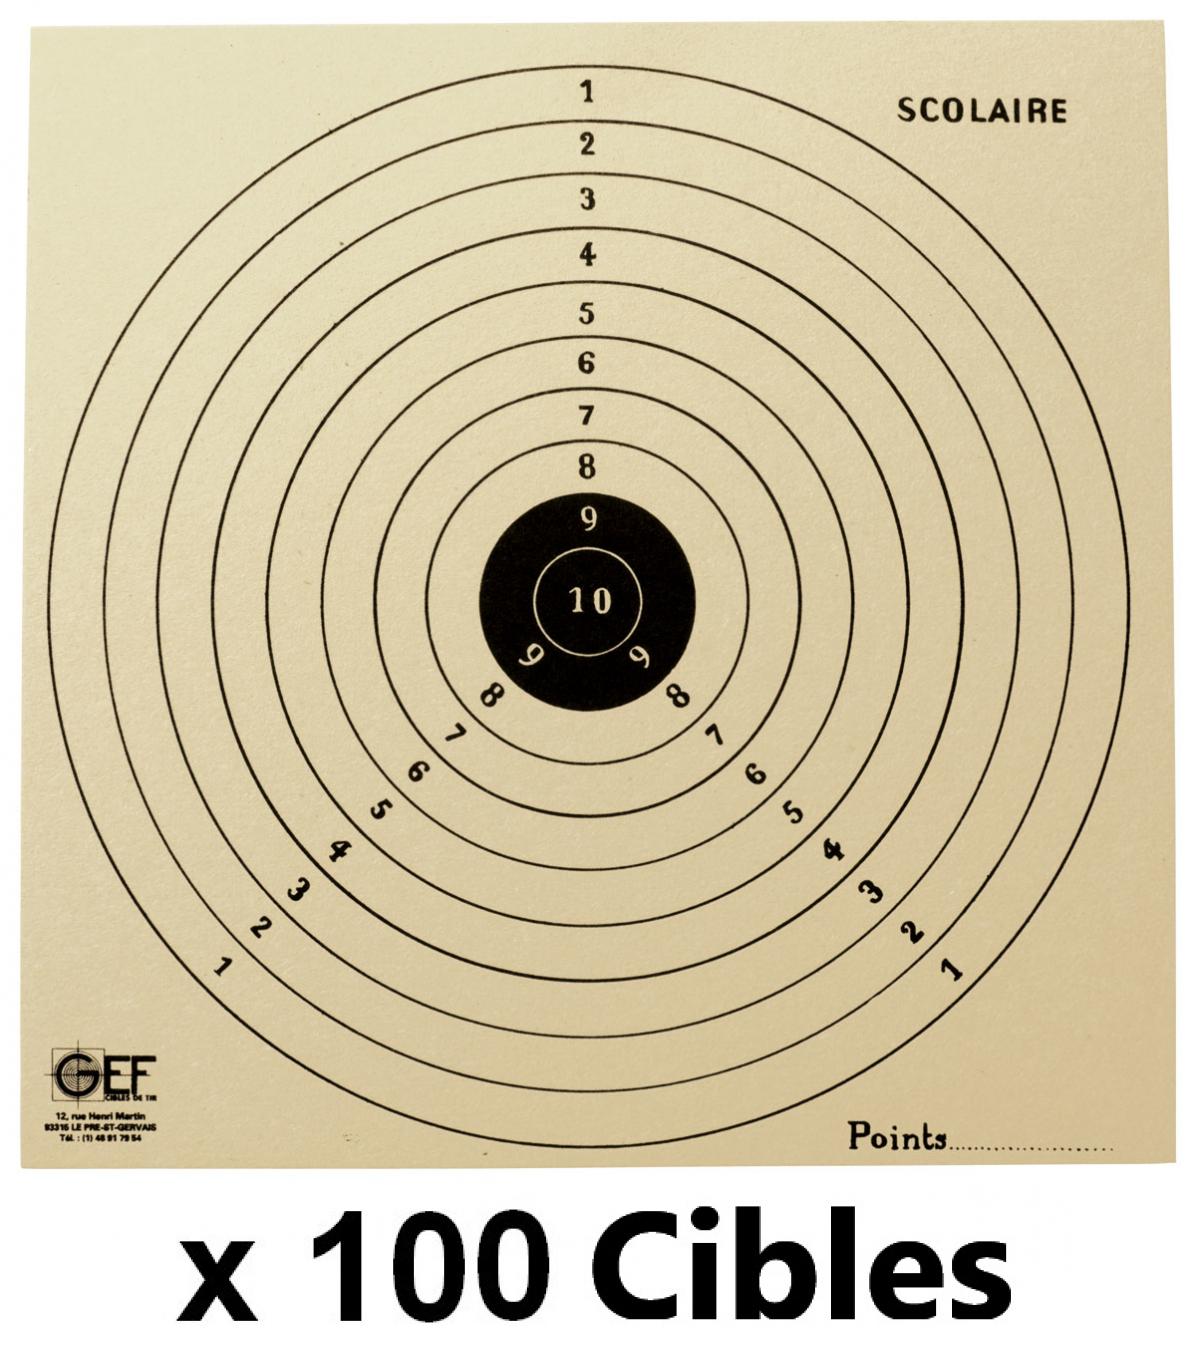 100 cibles GEF Carabine 50 m. Match 20x20 cm